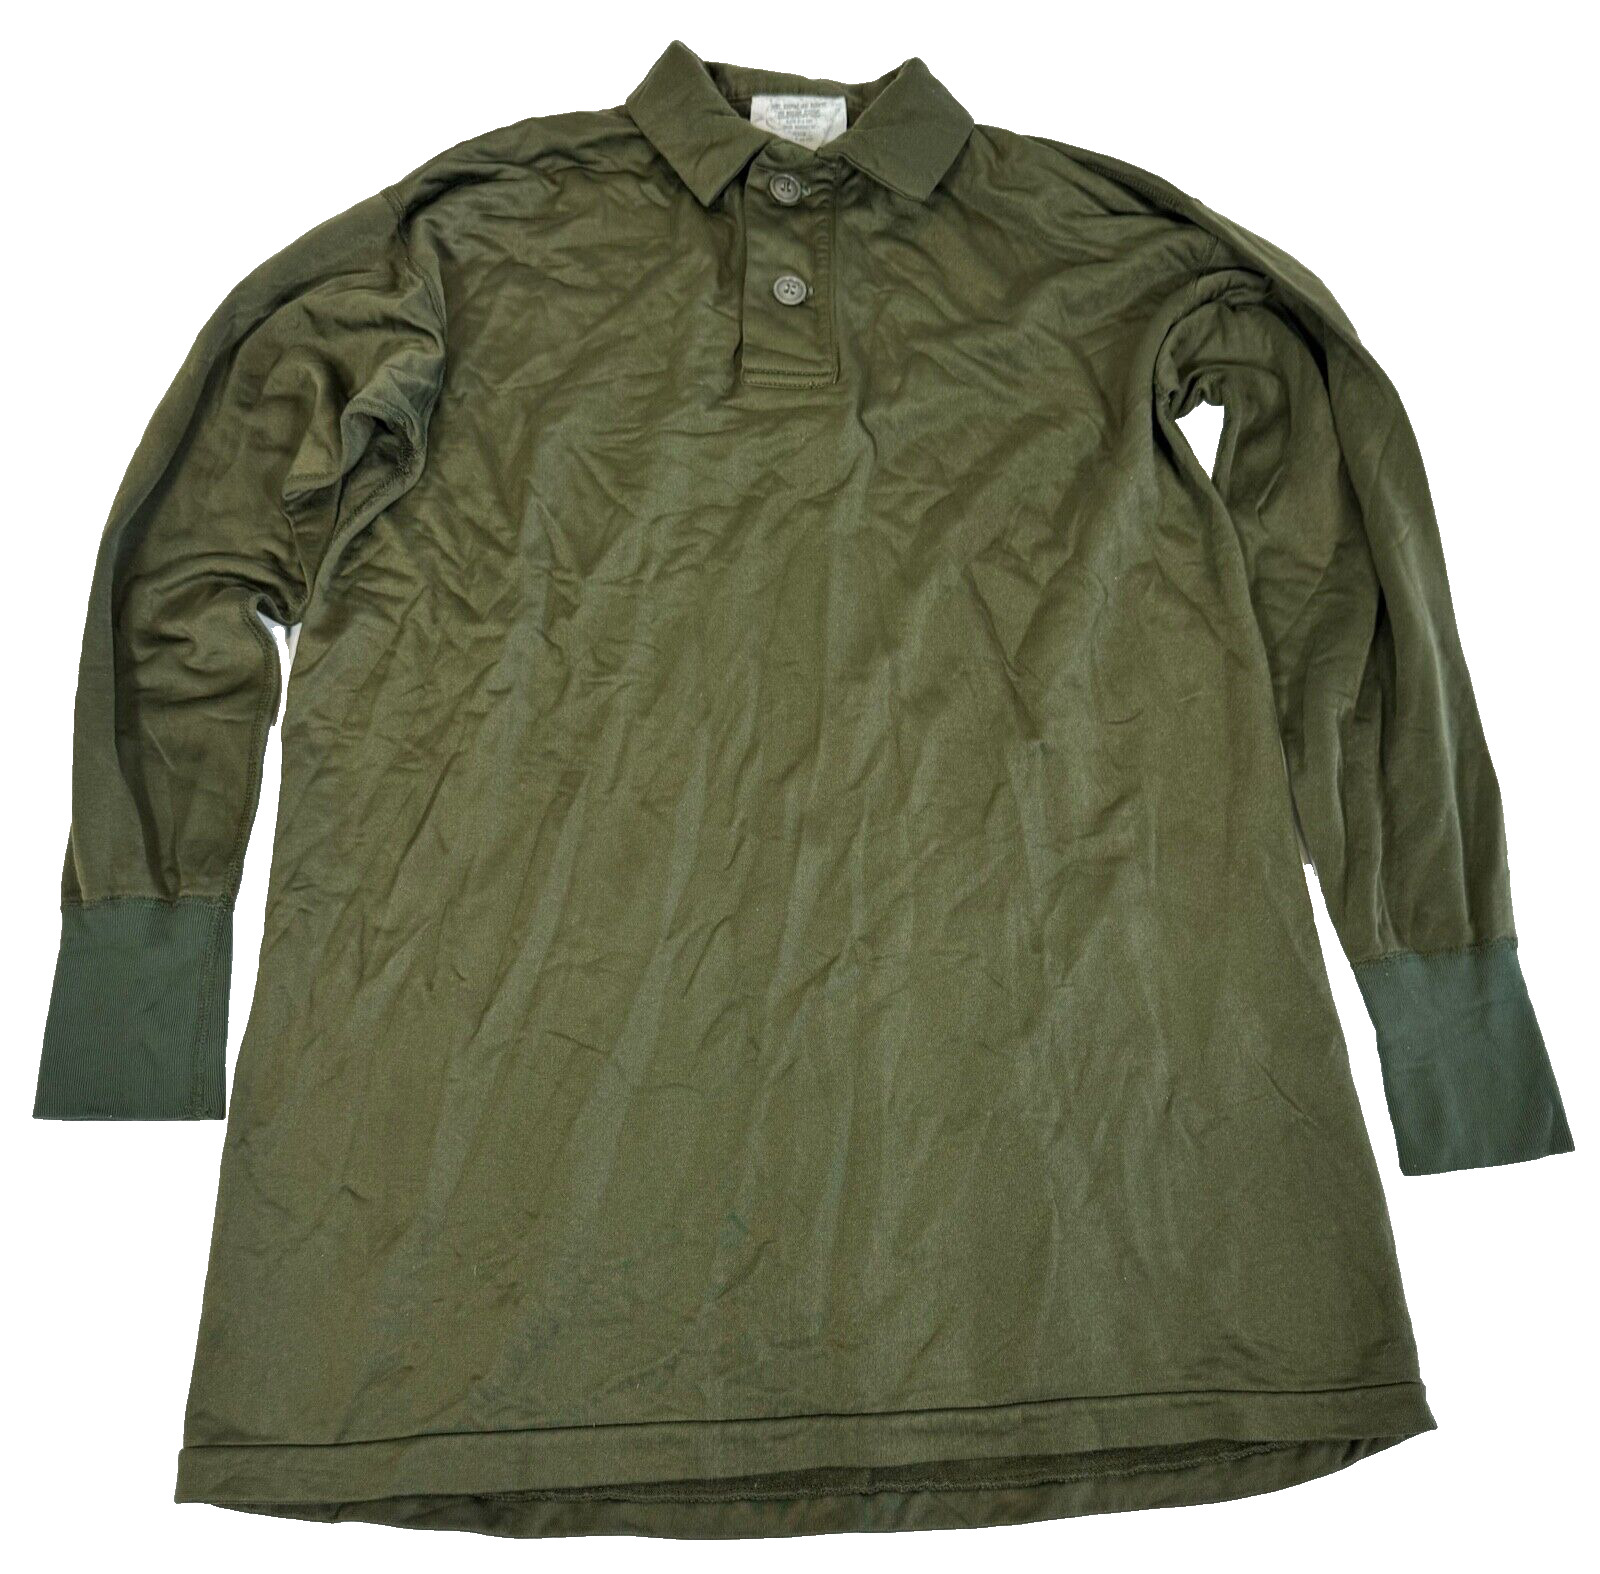 US Army Military Heat Retentive Sleeping Shirt Moisture Resistant Green Medium